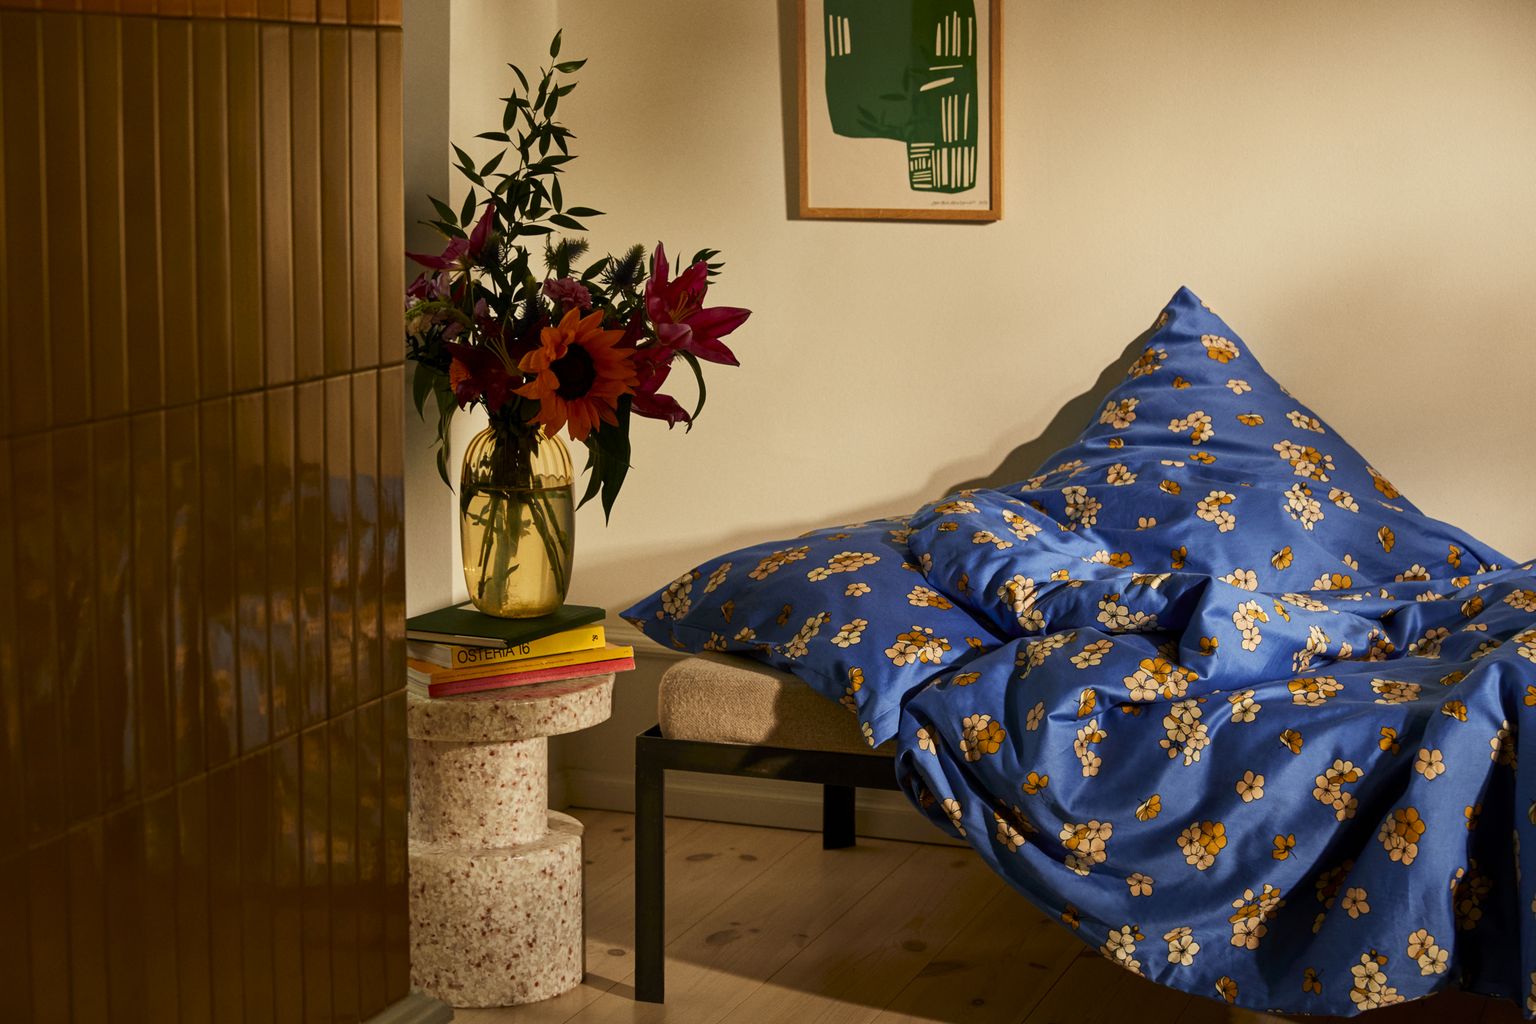 JUNA Grand behageligt sengelinned 140 x200 cm, blå